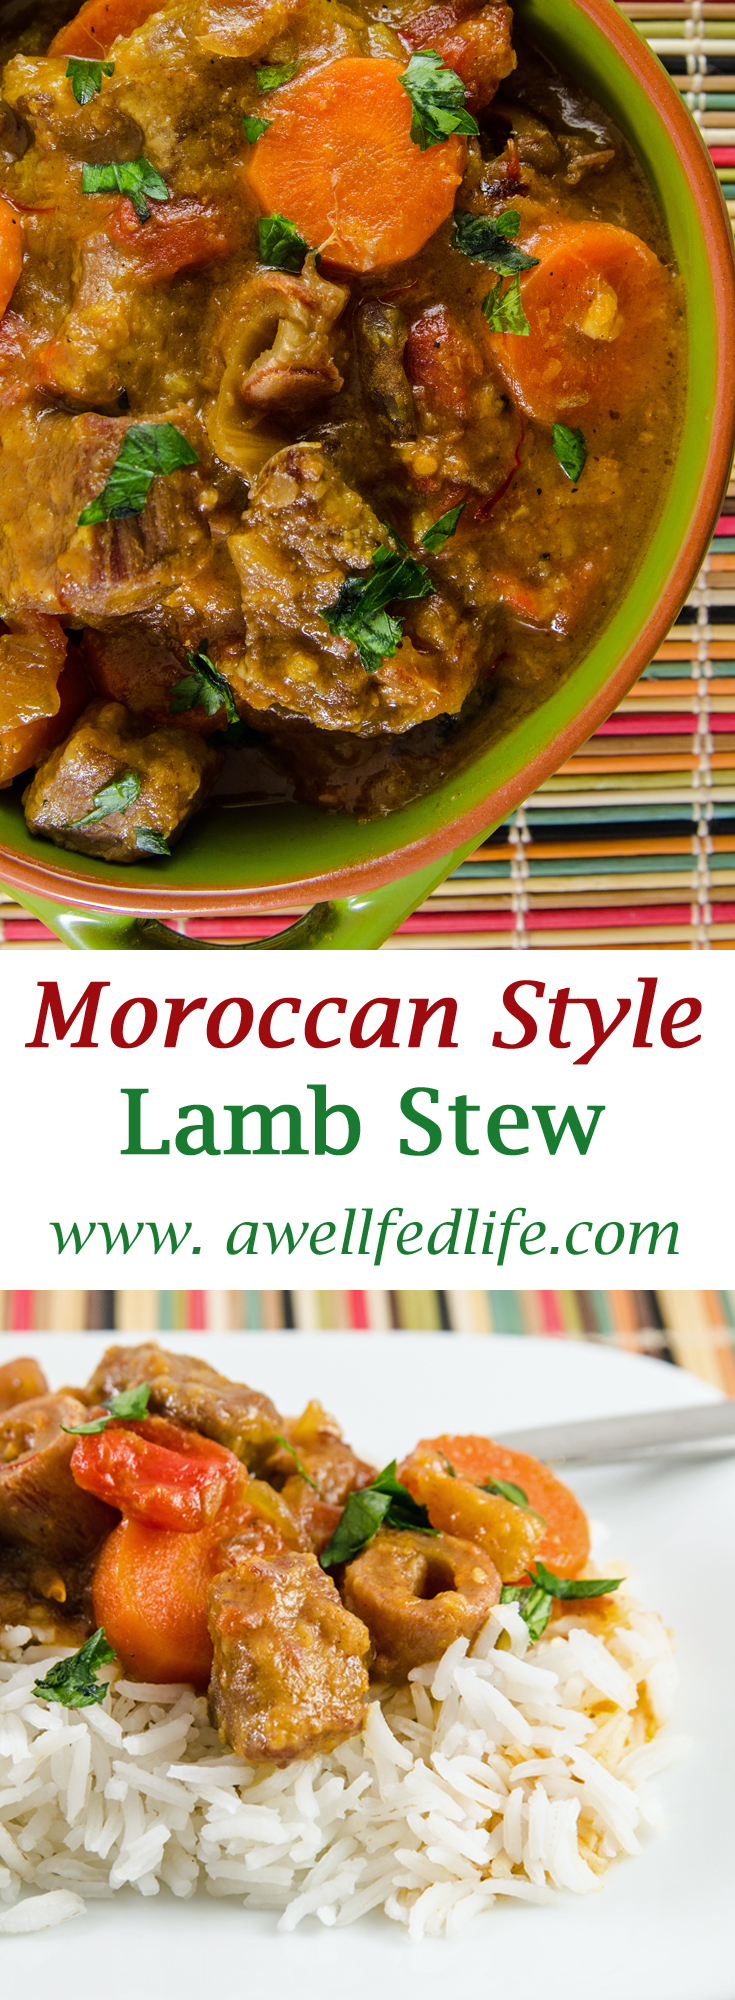 Moroccan Style Lamb Stew PInterest